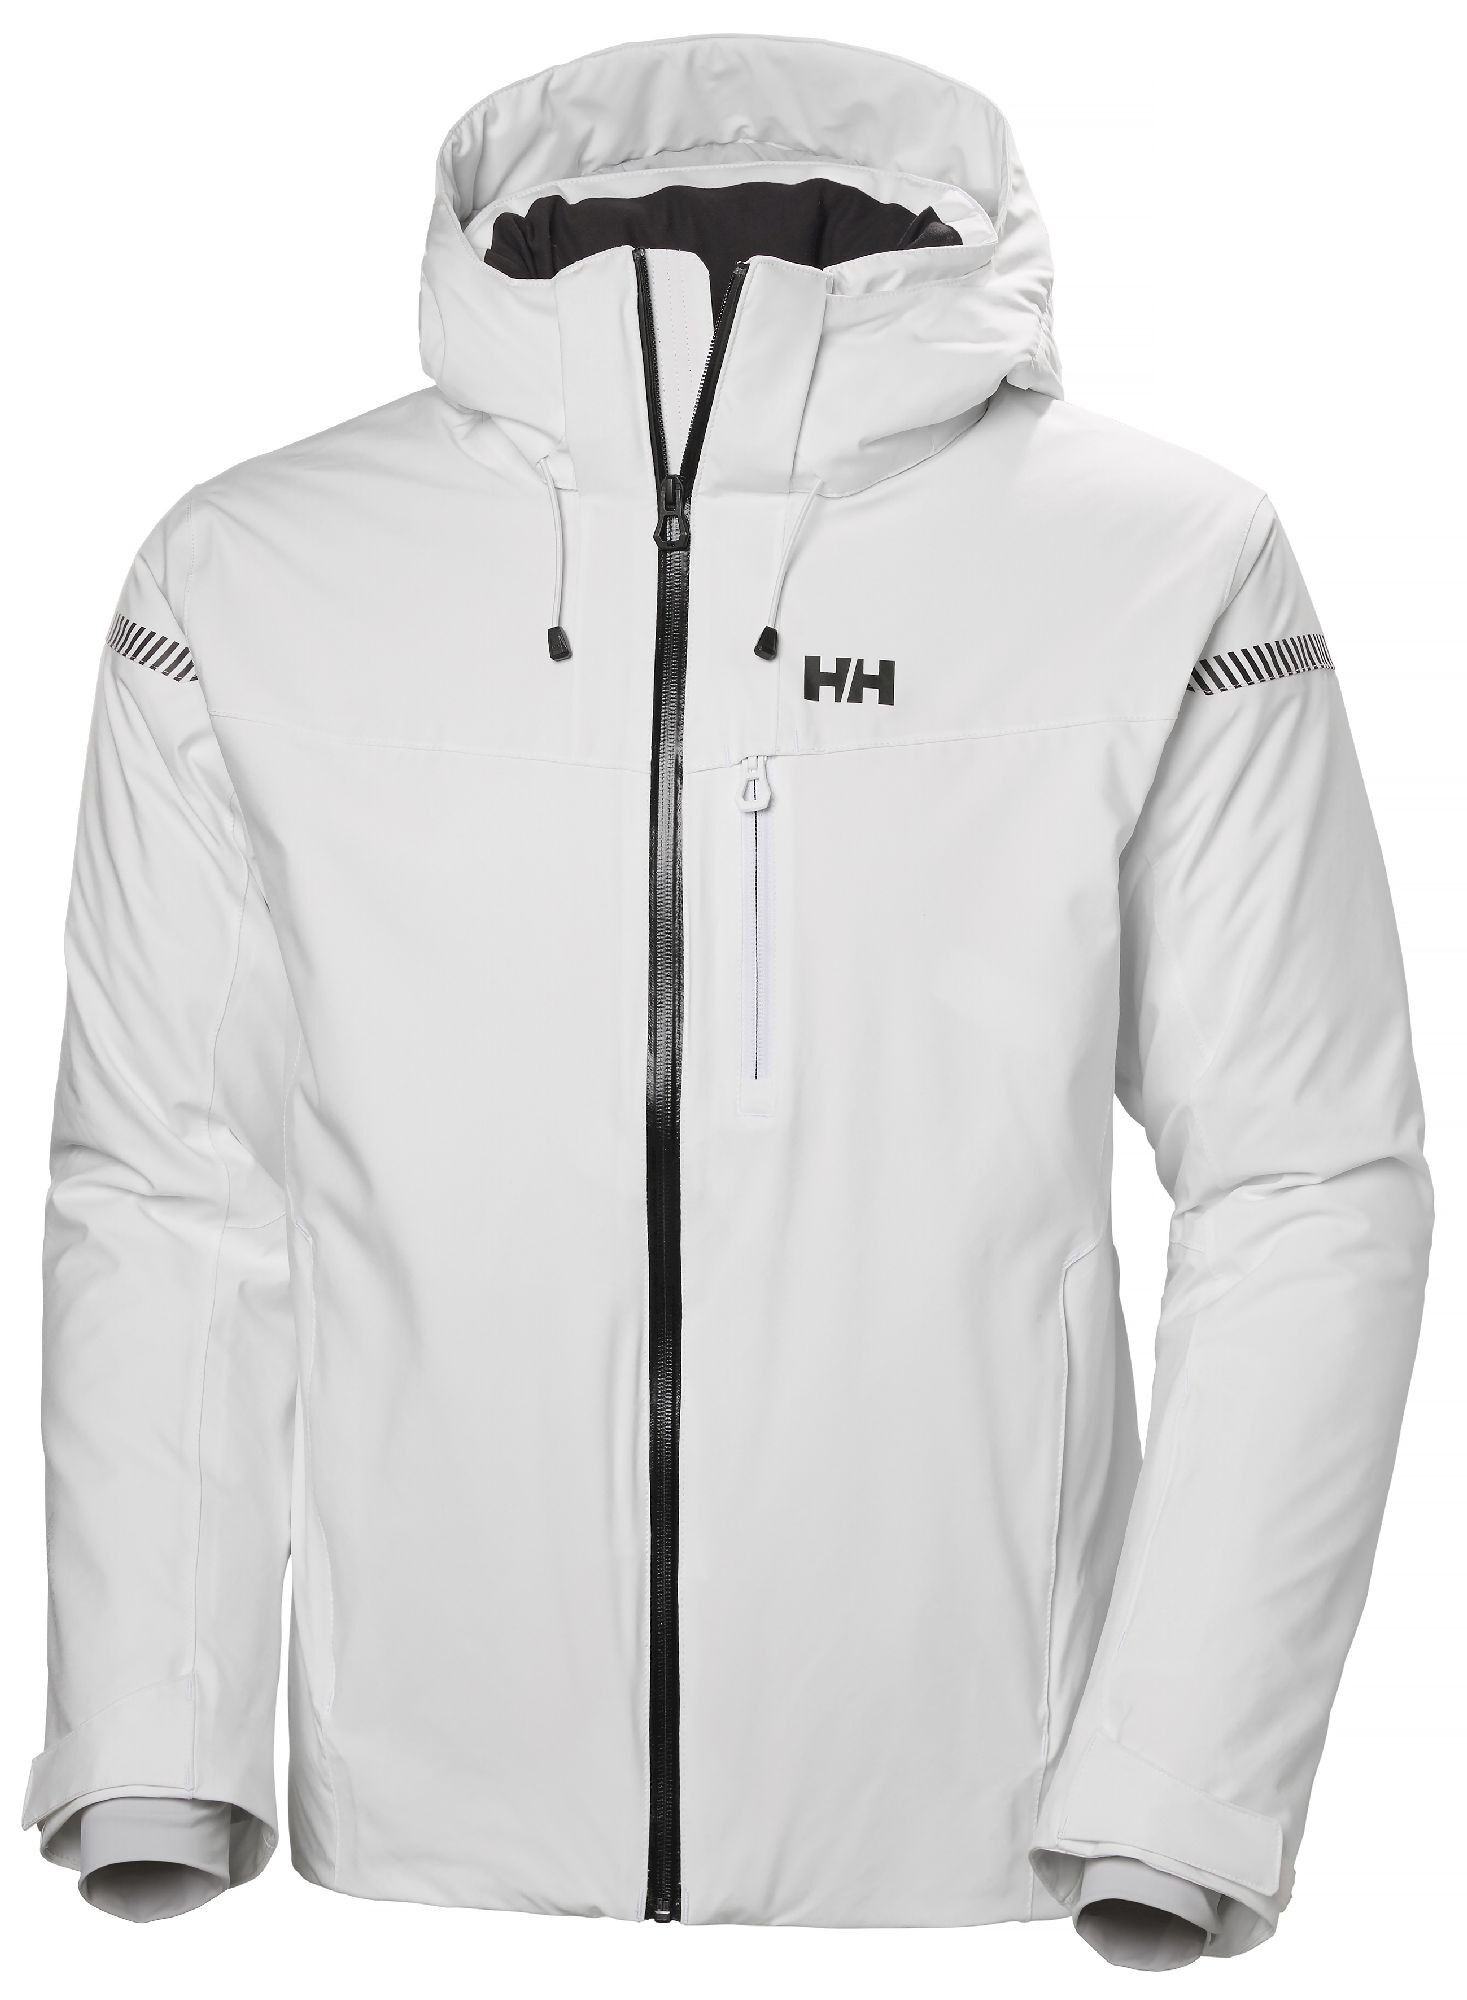 Helly Hansen Swift 4.0 Jacket - Ski jacket - Men's